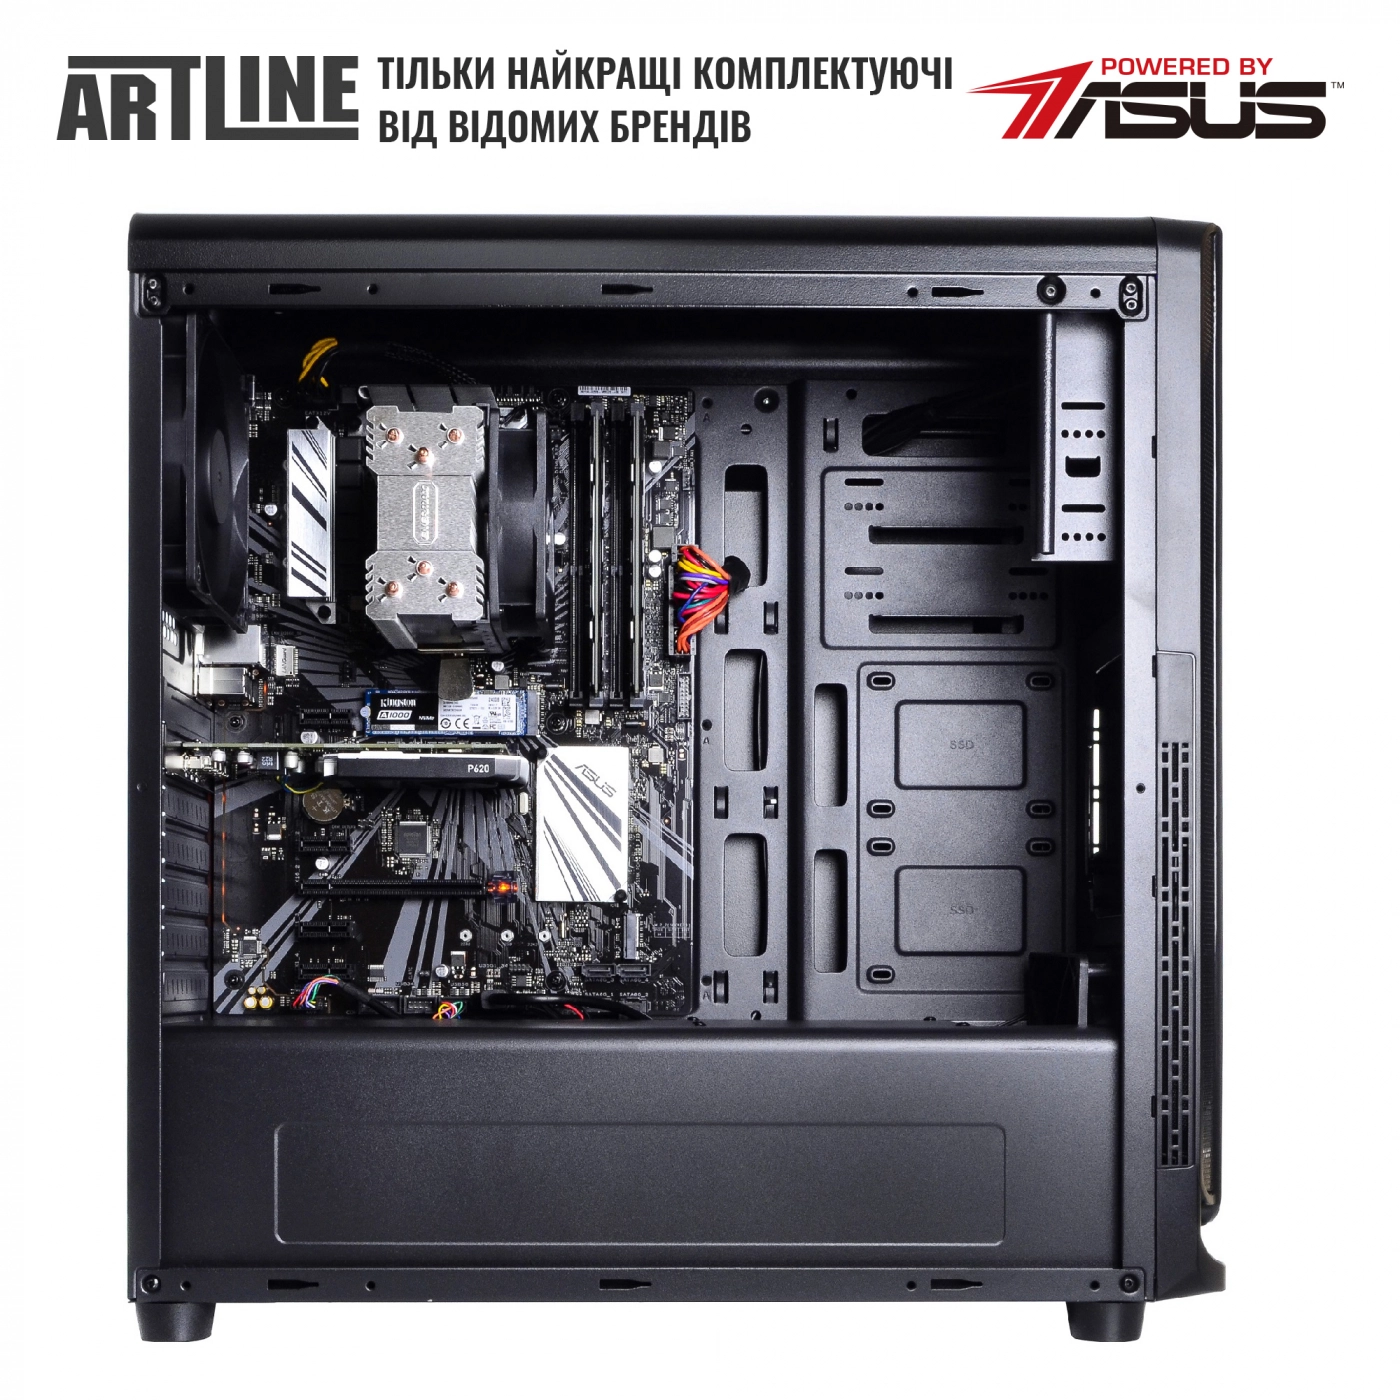 Купити Сервер ARTLINE Business T65v09 - фото 5